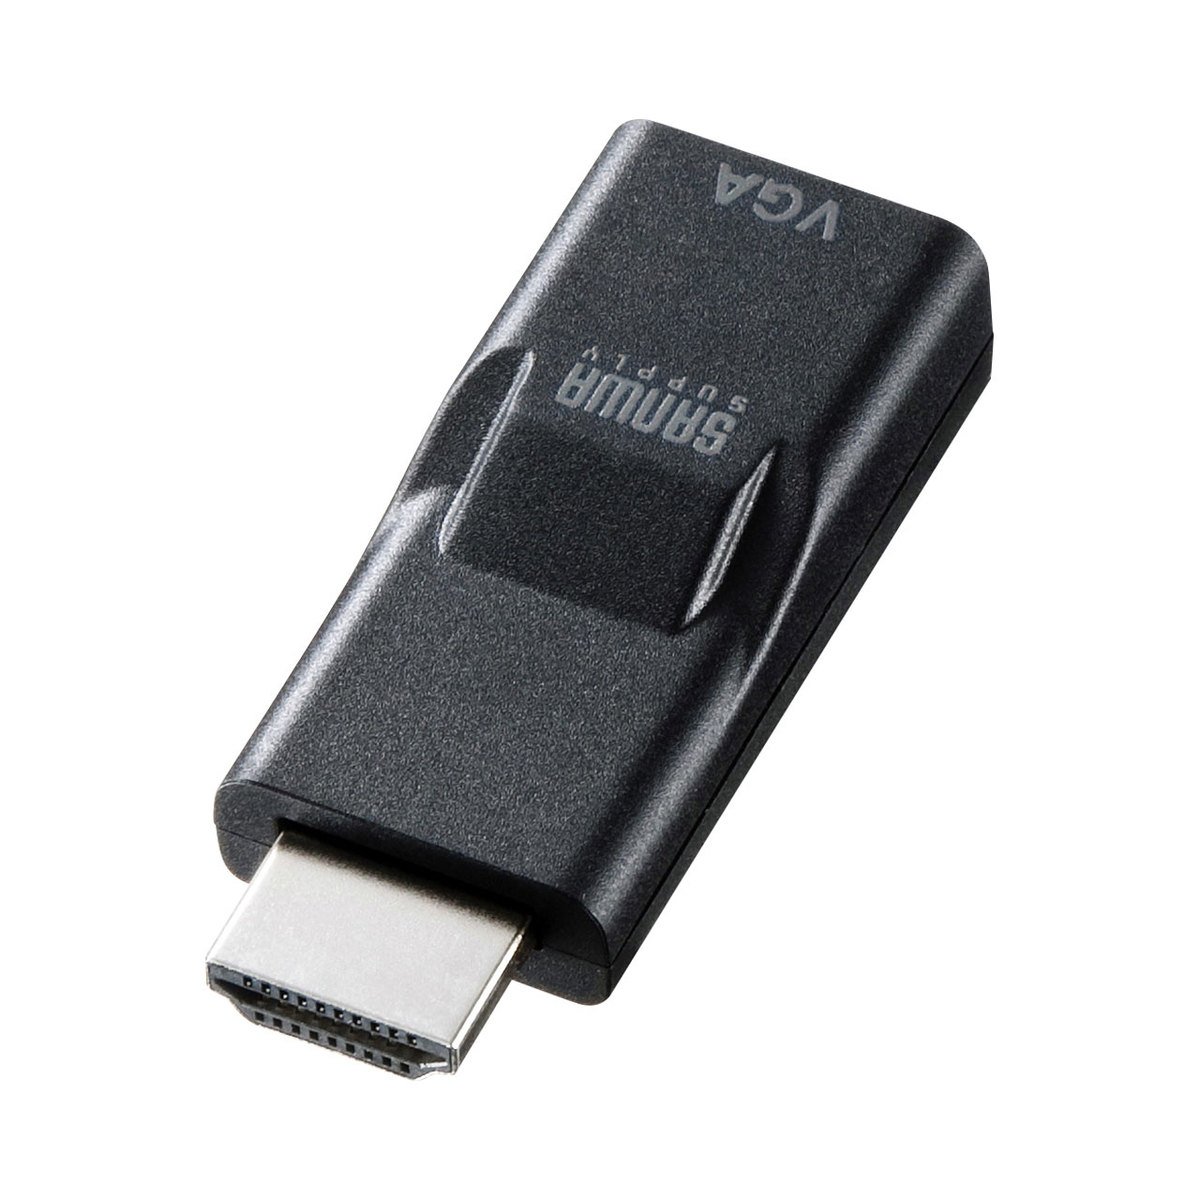 HDMI-VGA Conversion Adapter for Display Cable, A Male to VGA Female (Sanwa Supply)